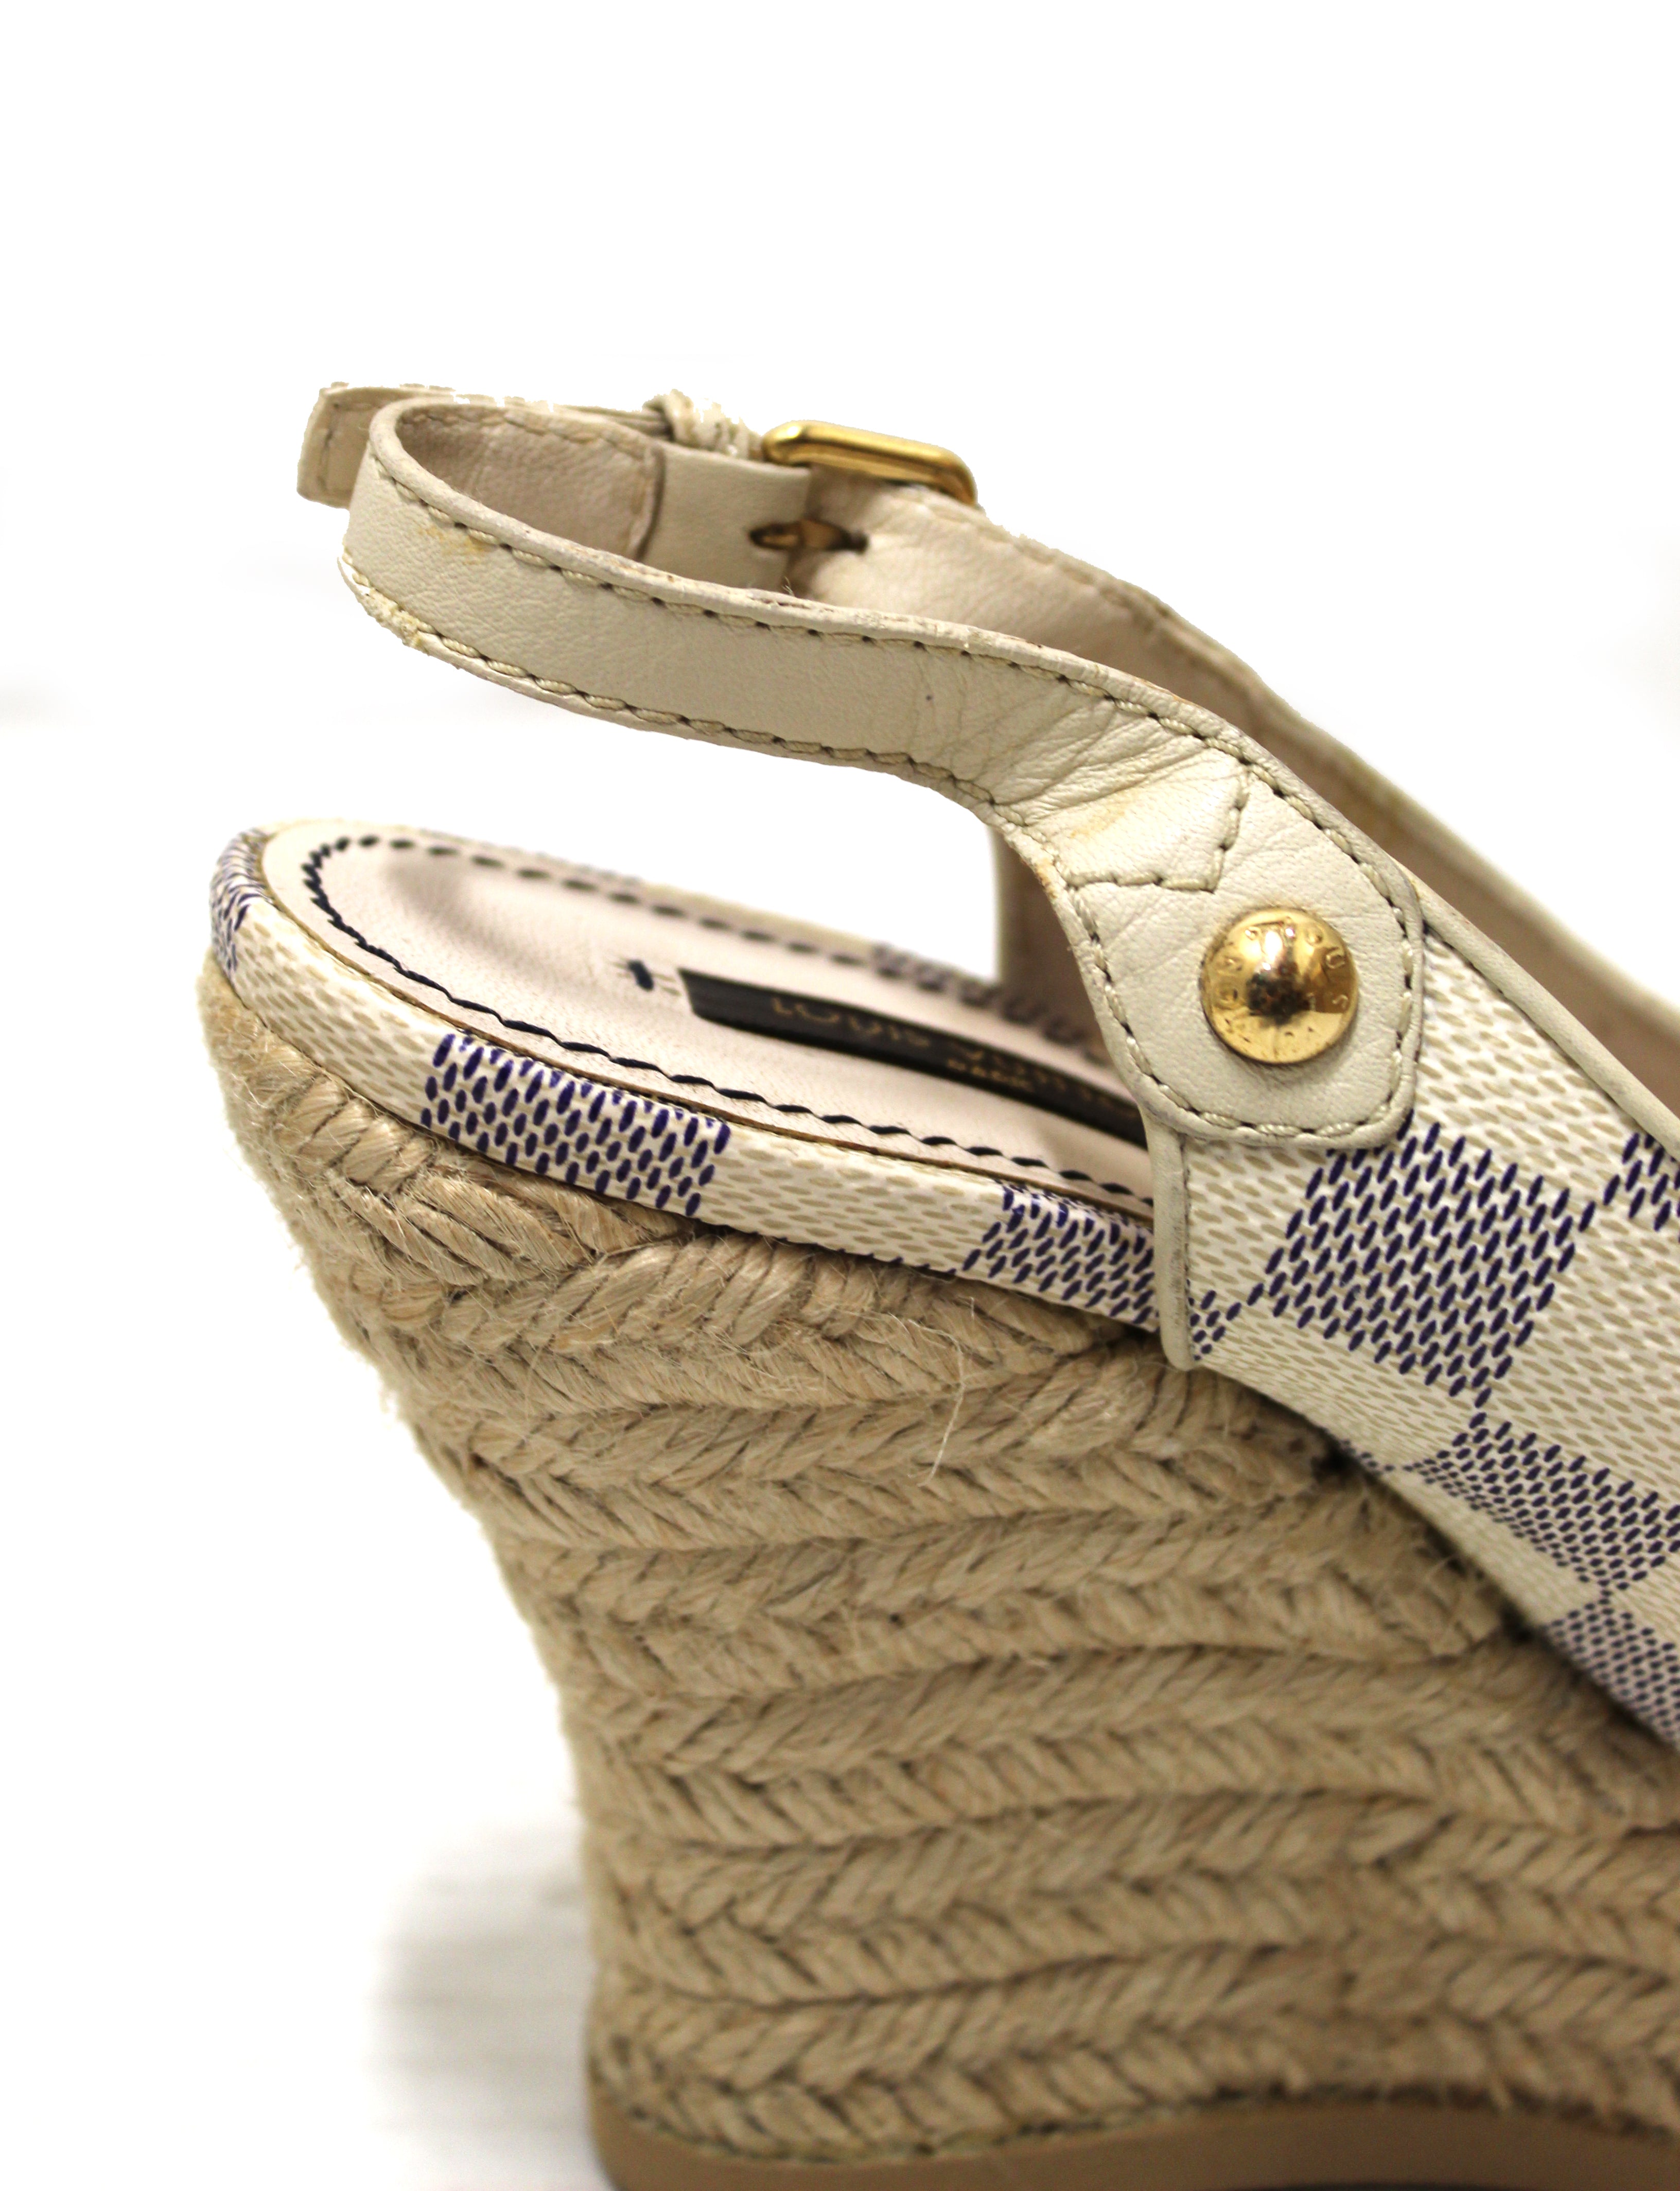 Louis Vuitton Espadrille Wedge Sandals